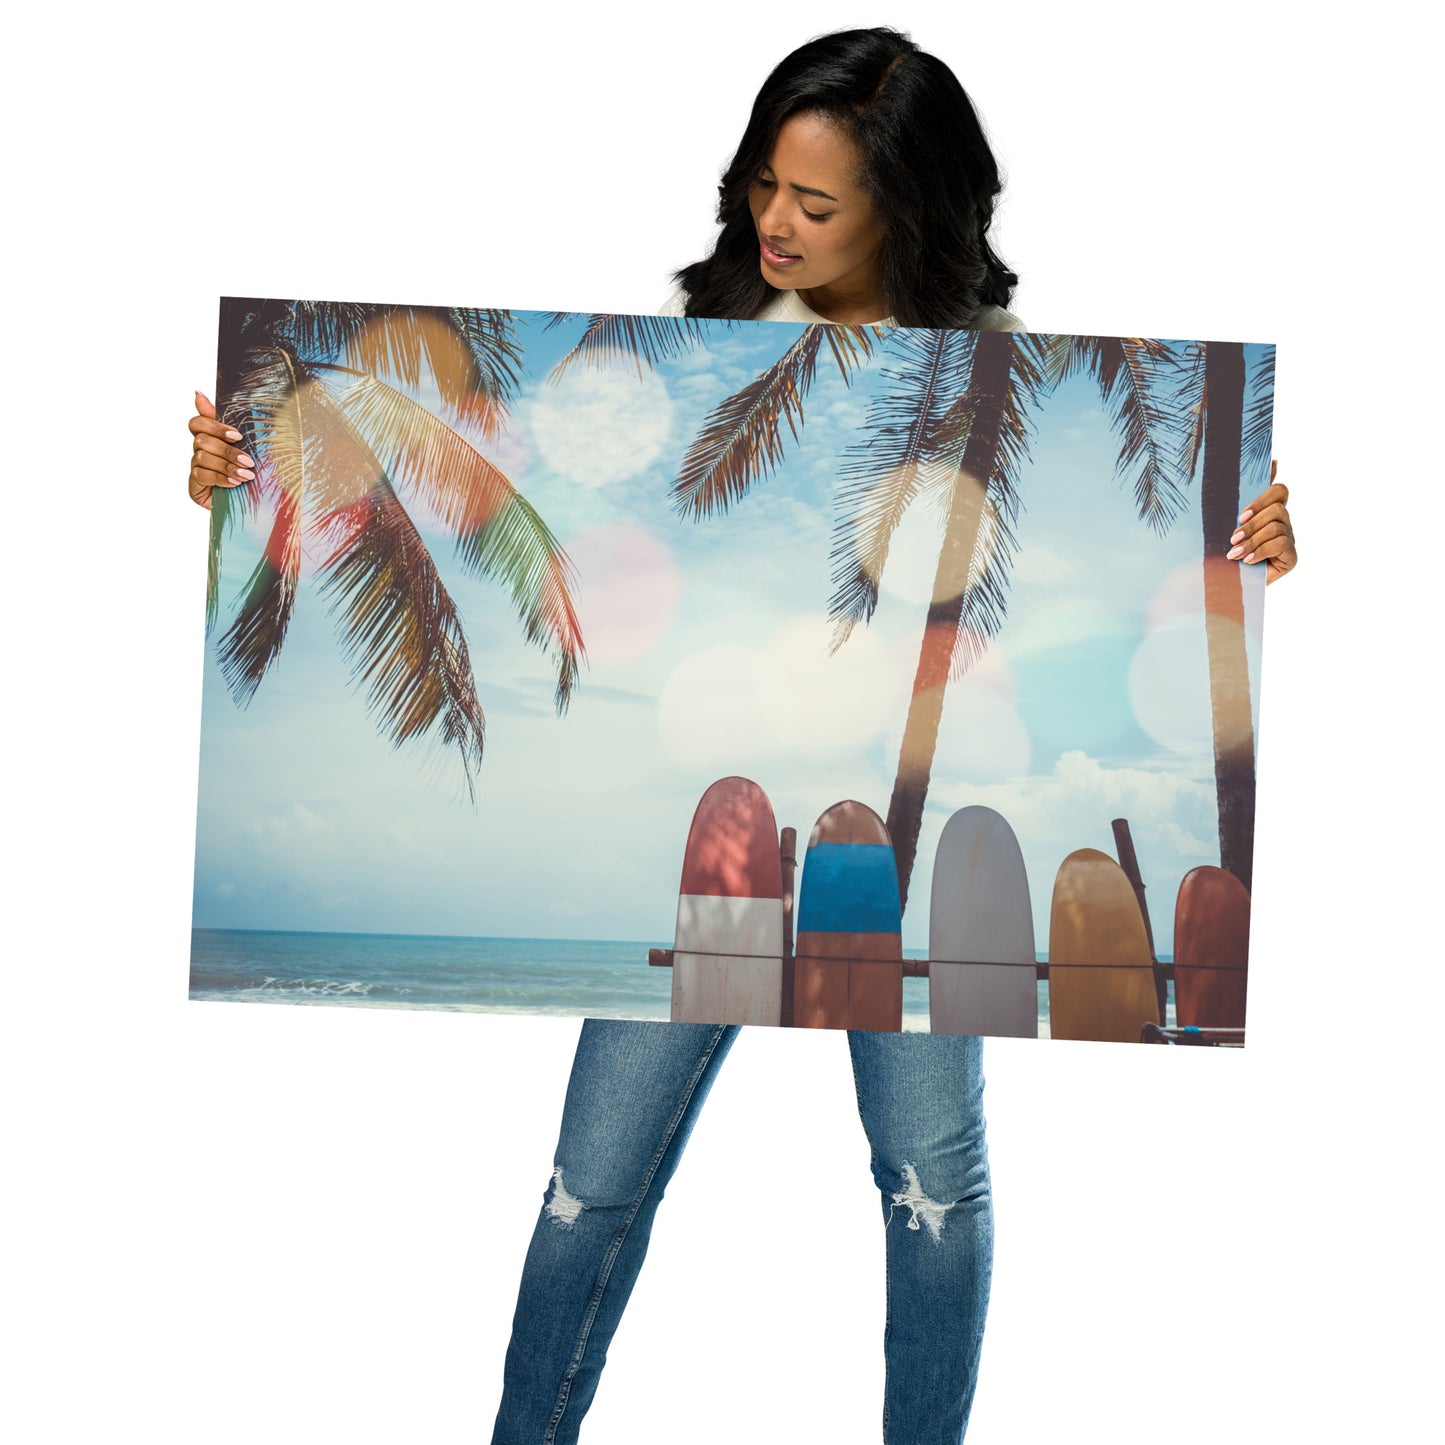 Surf Life Tropical Landscape Surfboard Scene Lifestyle Photograph Loose Wall Art Print